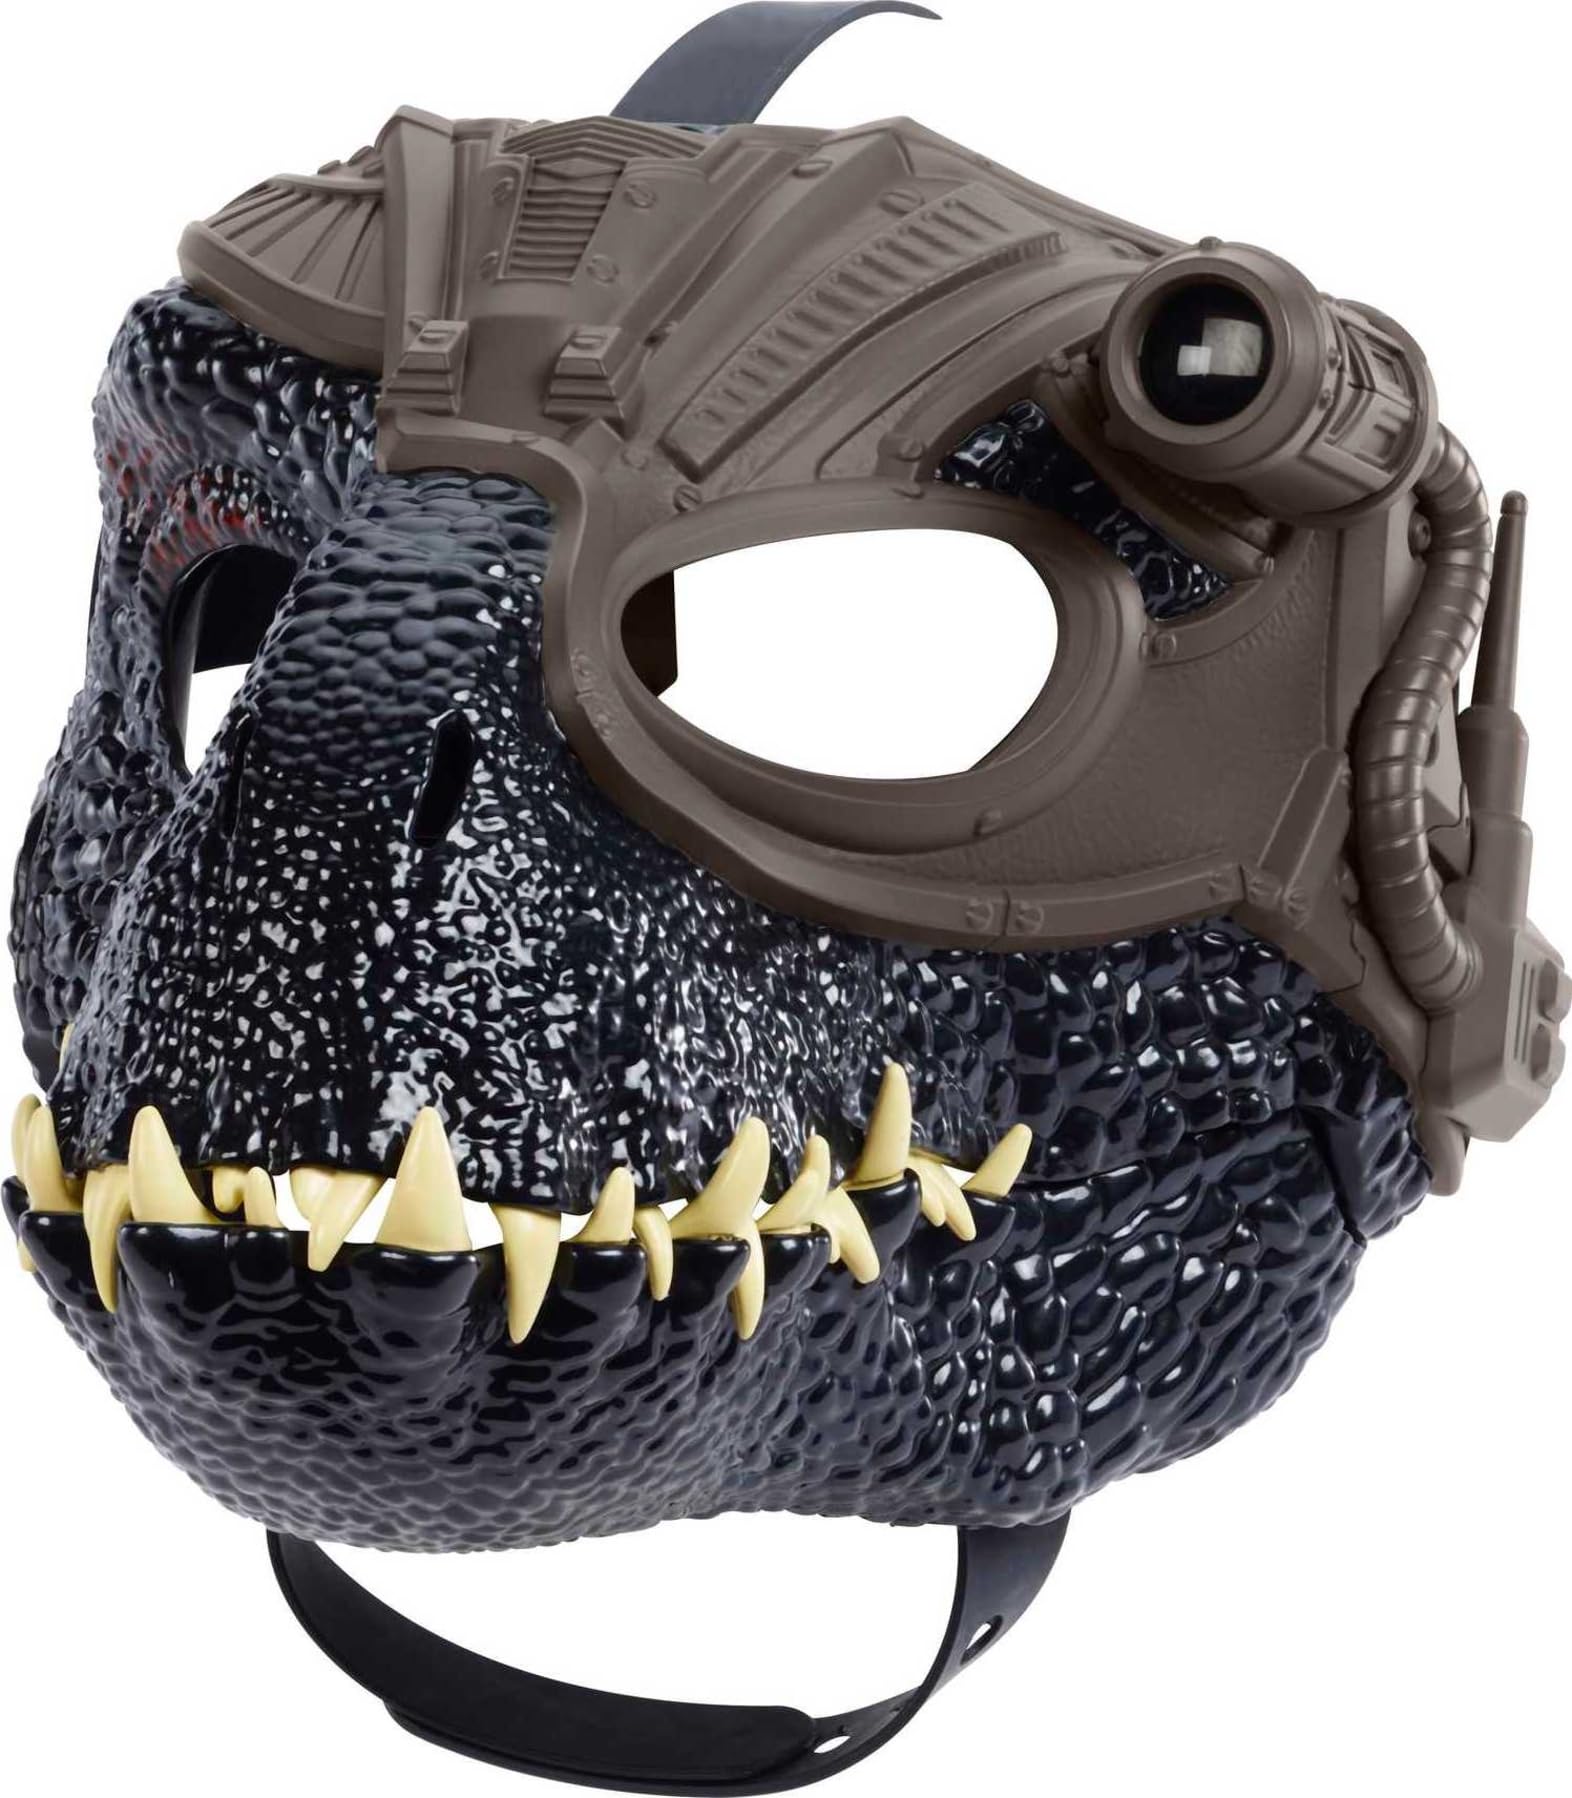 Mattel Jurassic World Track 'n Roar Indoraptor Dinosaur Mask w/ Adjustable Strap & Red Tracker Light $9.81 + Free Shipping w/ Prime or on $35+